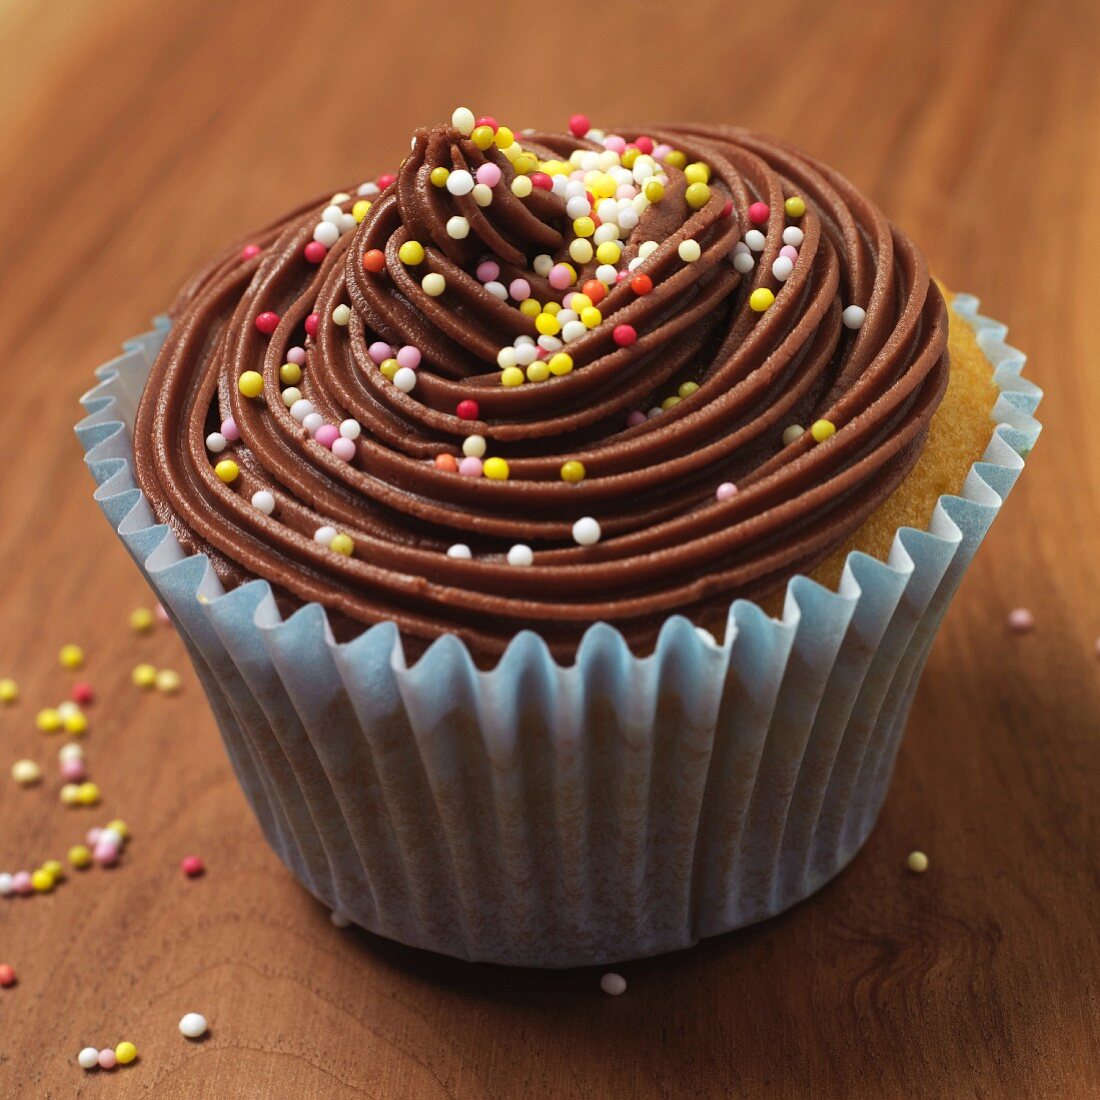 A chocolate cupcake with colourful sugar balls